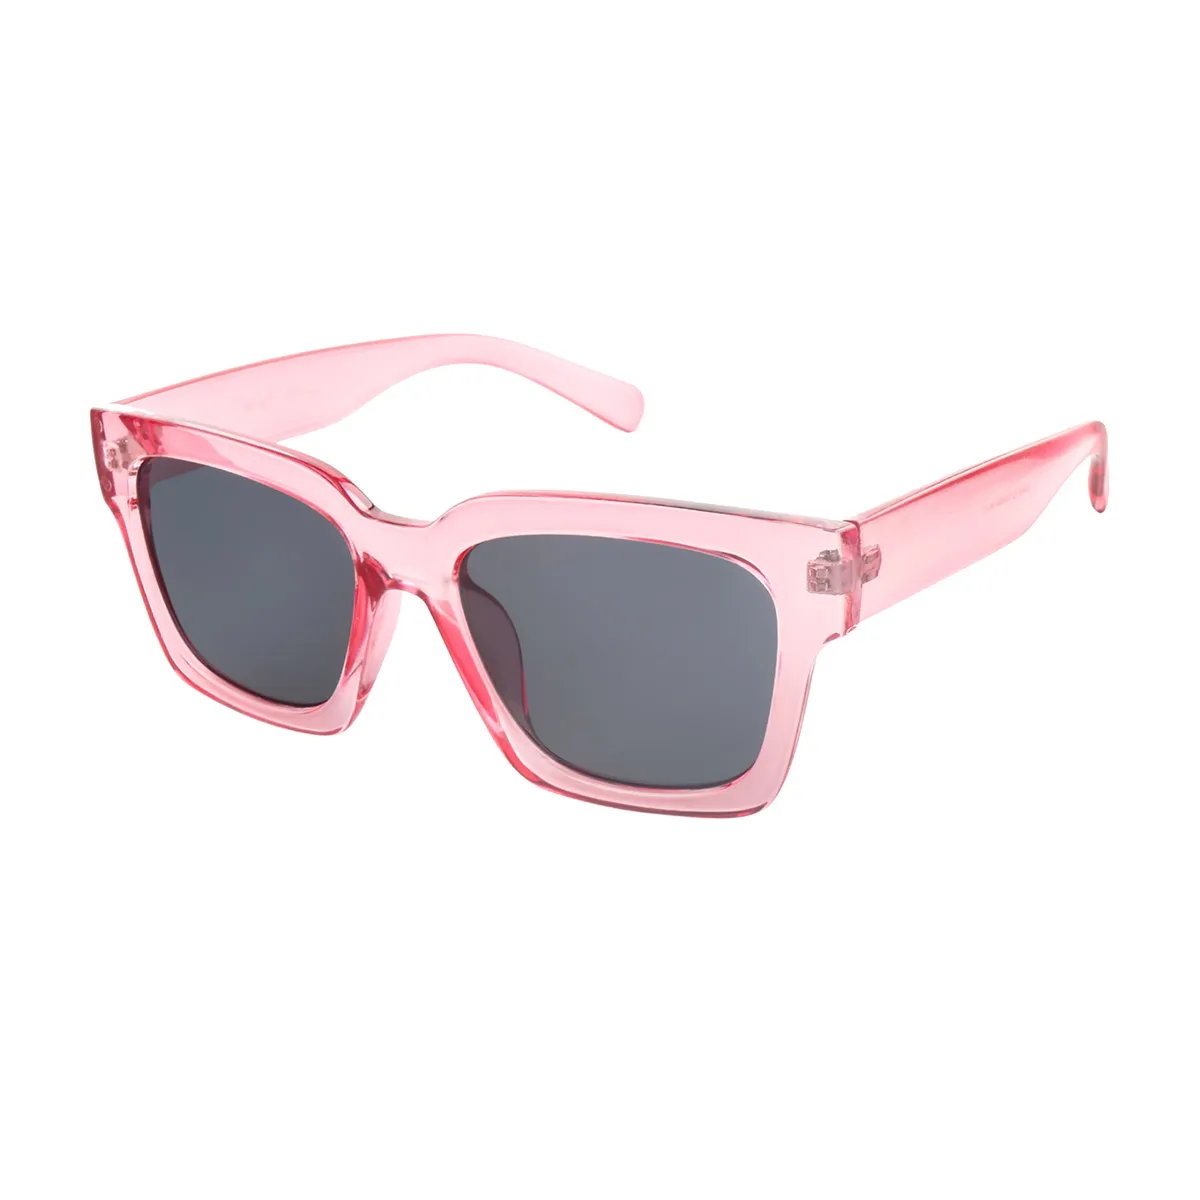 Jordi - Square  Sunglasses for Women